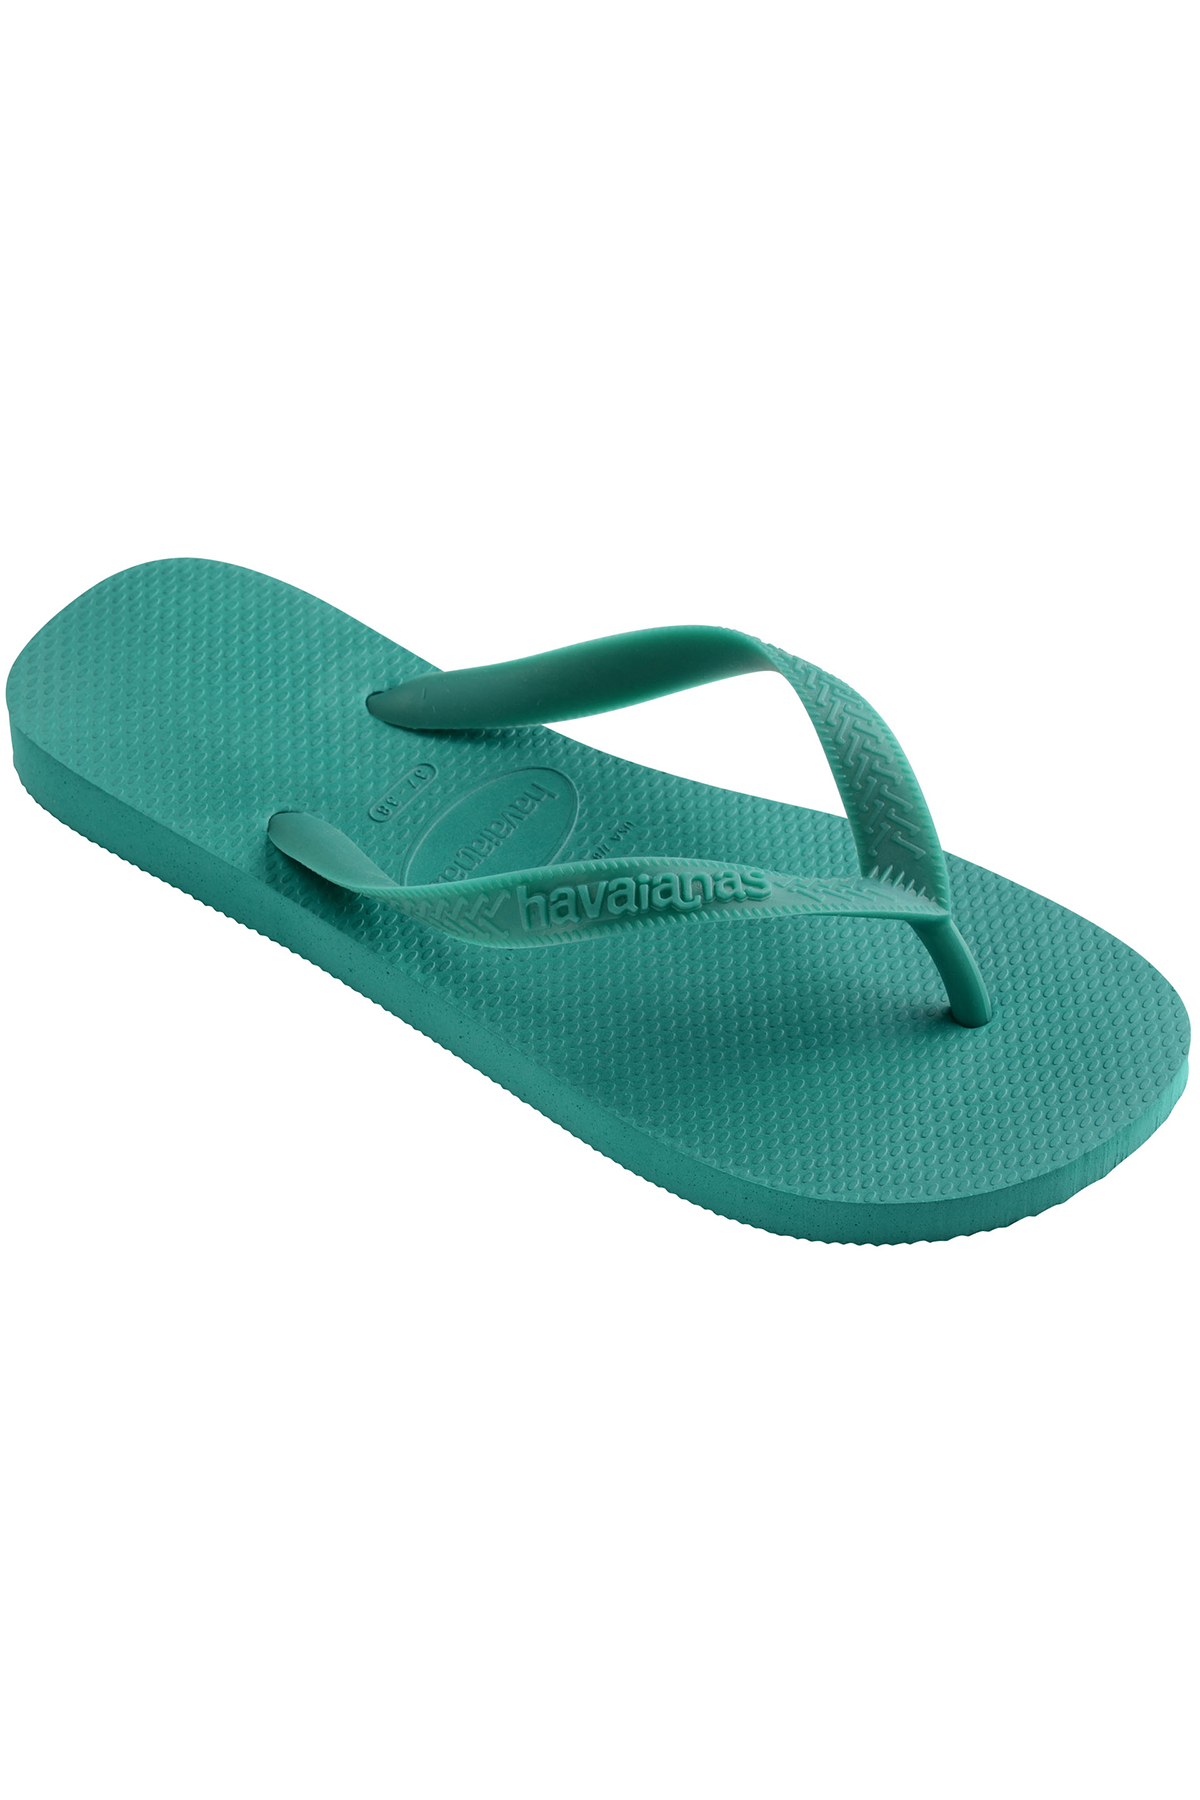 Havaianas Unisex Slippers - Green